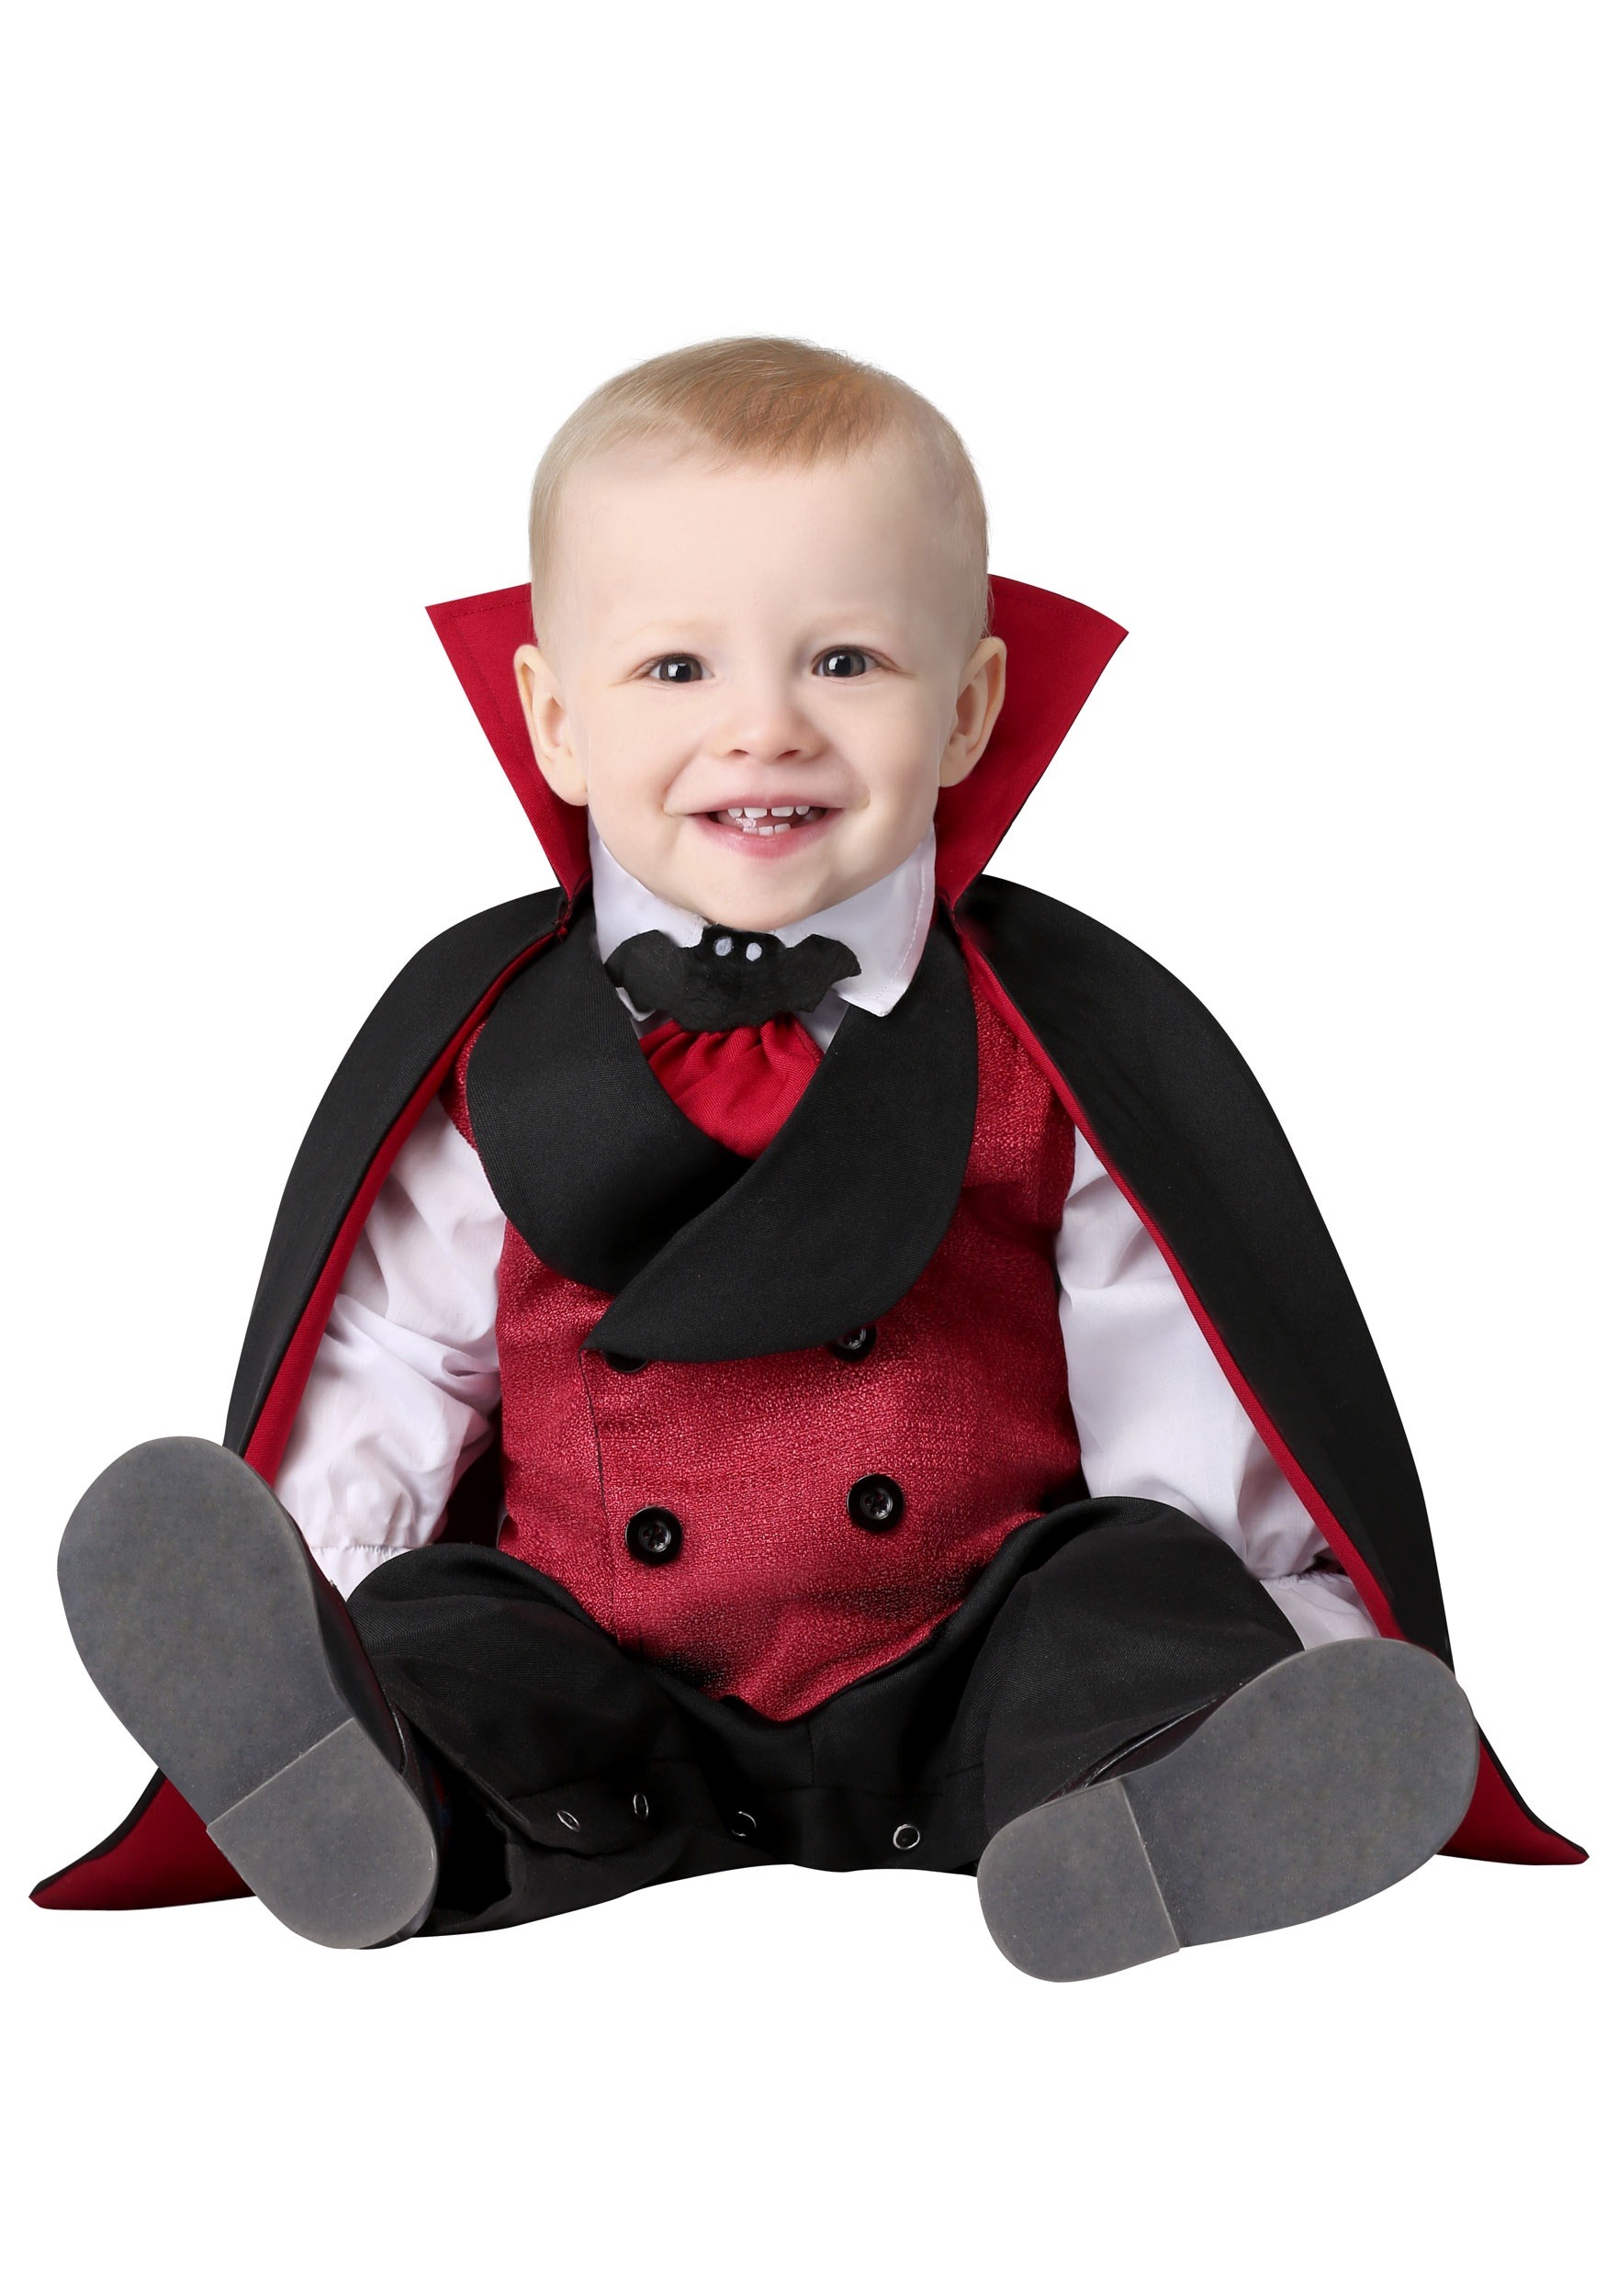 Count Dracula Infant Costume